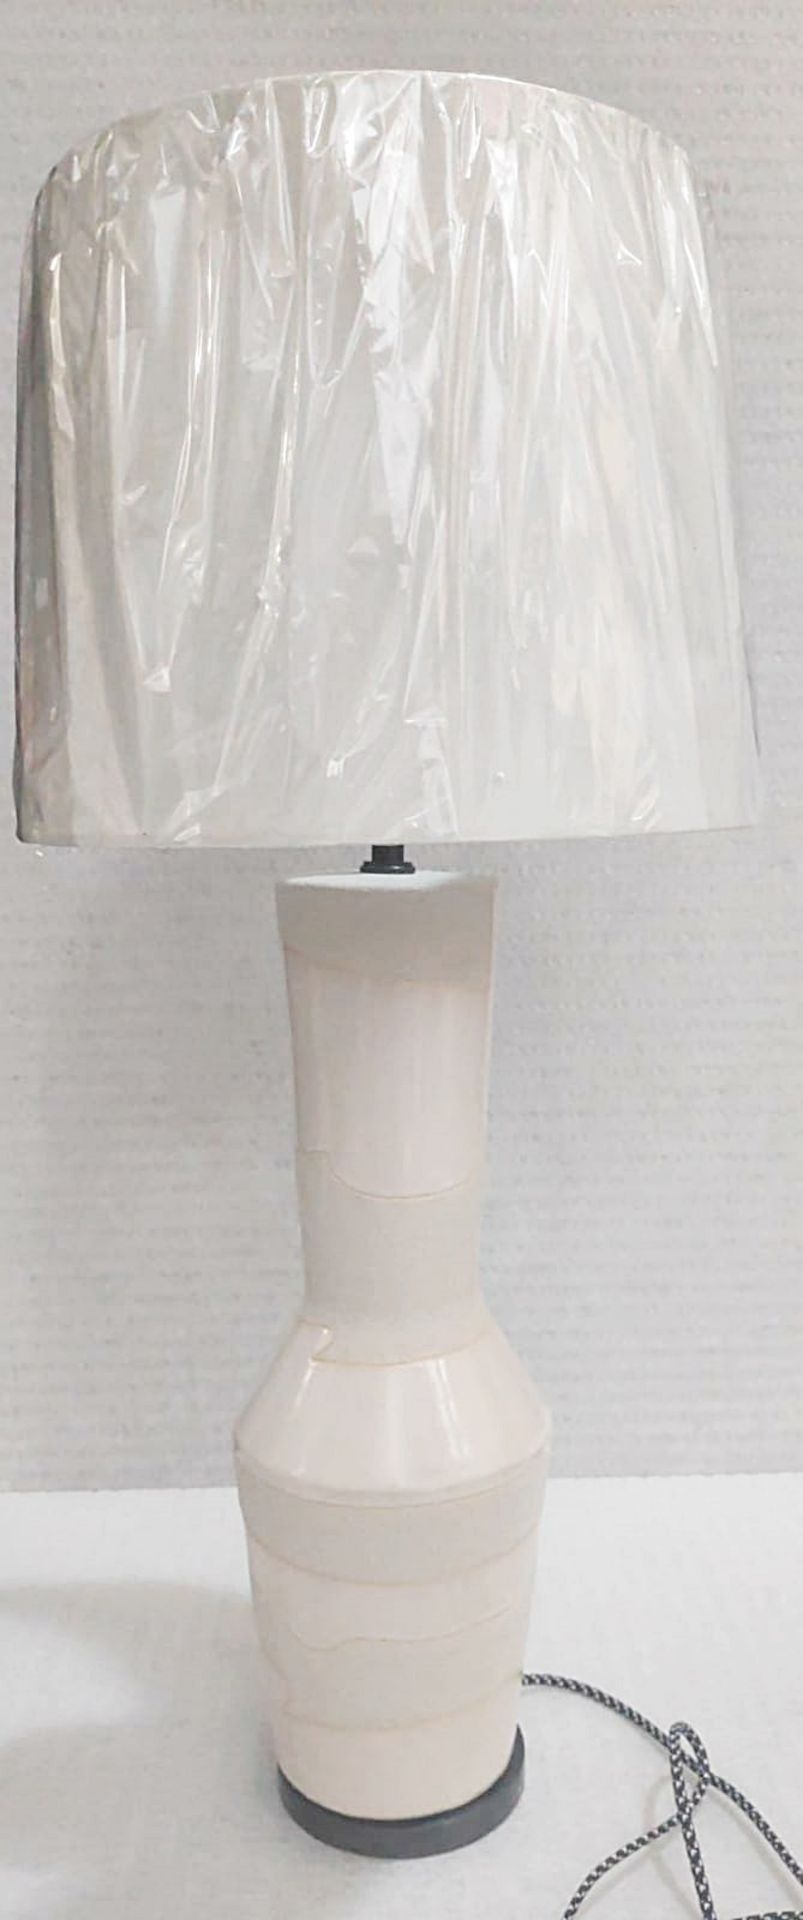 1 x KELLY WEARSTLER / VISUAL COMFORT 'Alta' Designer Table Lamp In White - Original Price £1,000 - Image 6 of 13